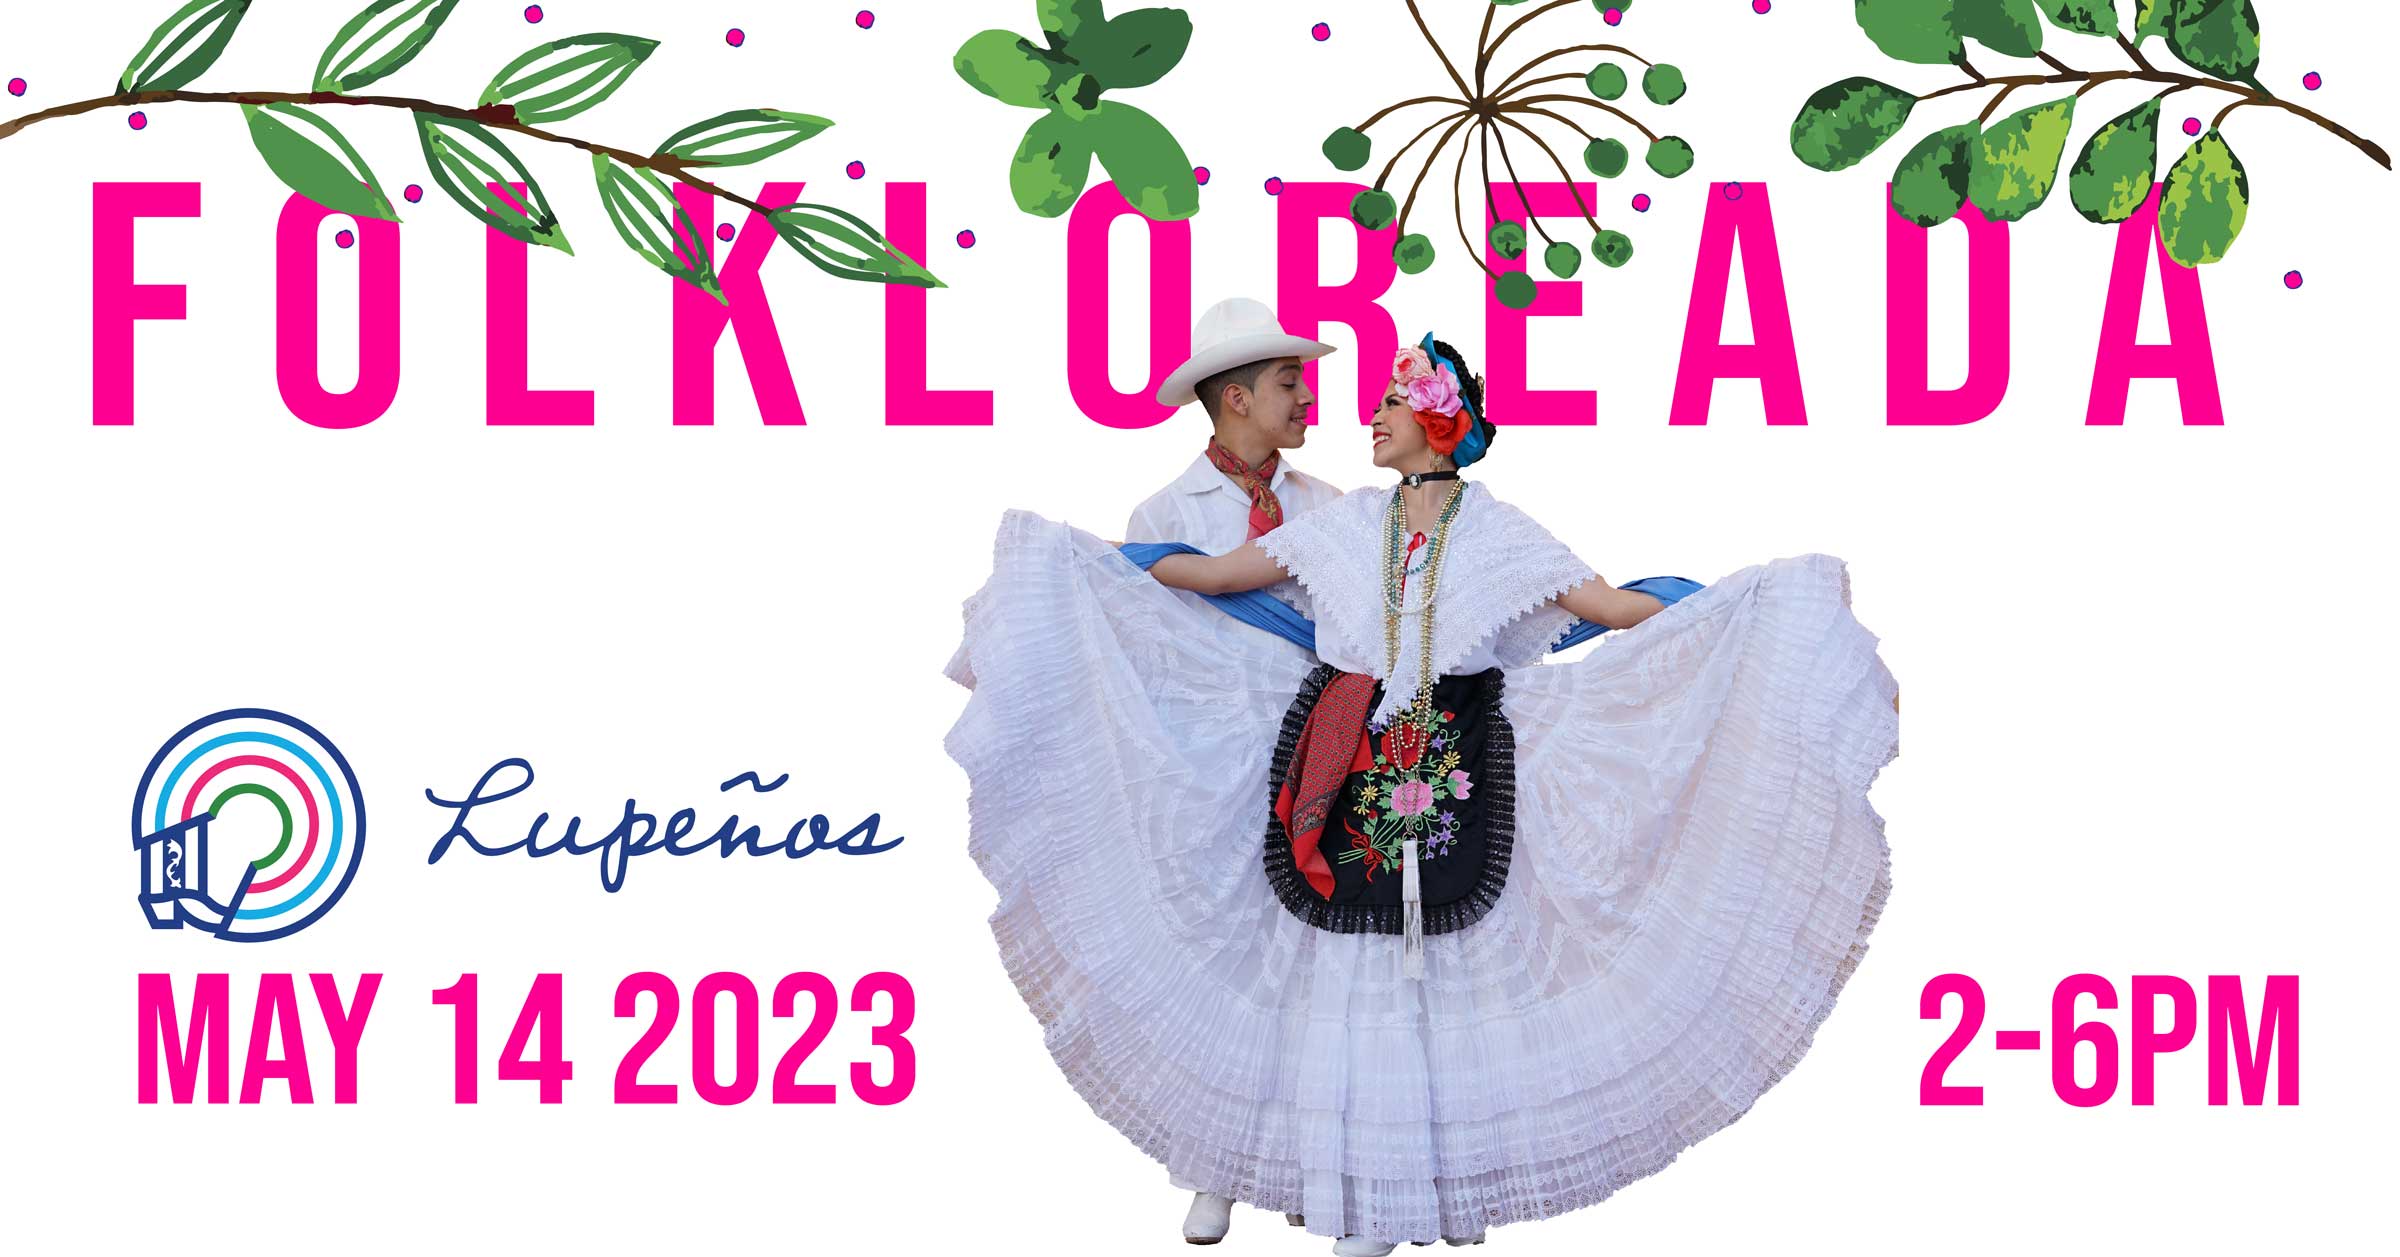 FOLKLOREADA 2023